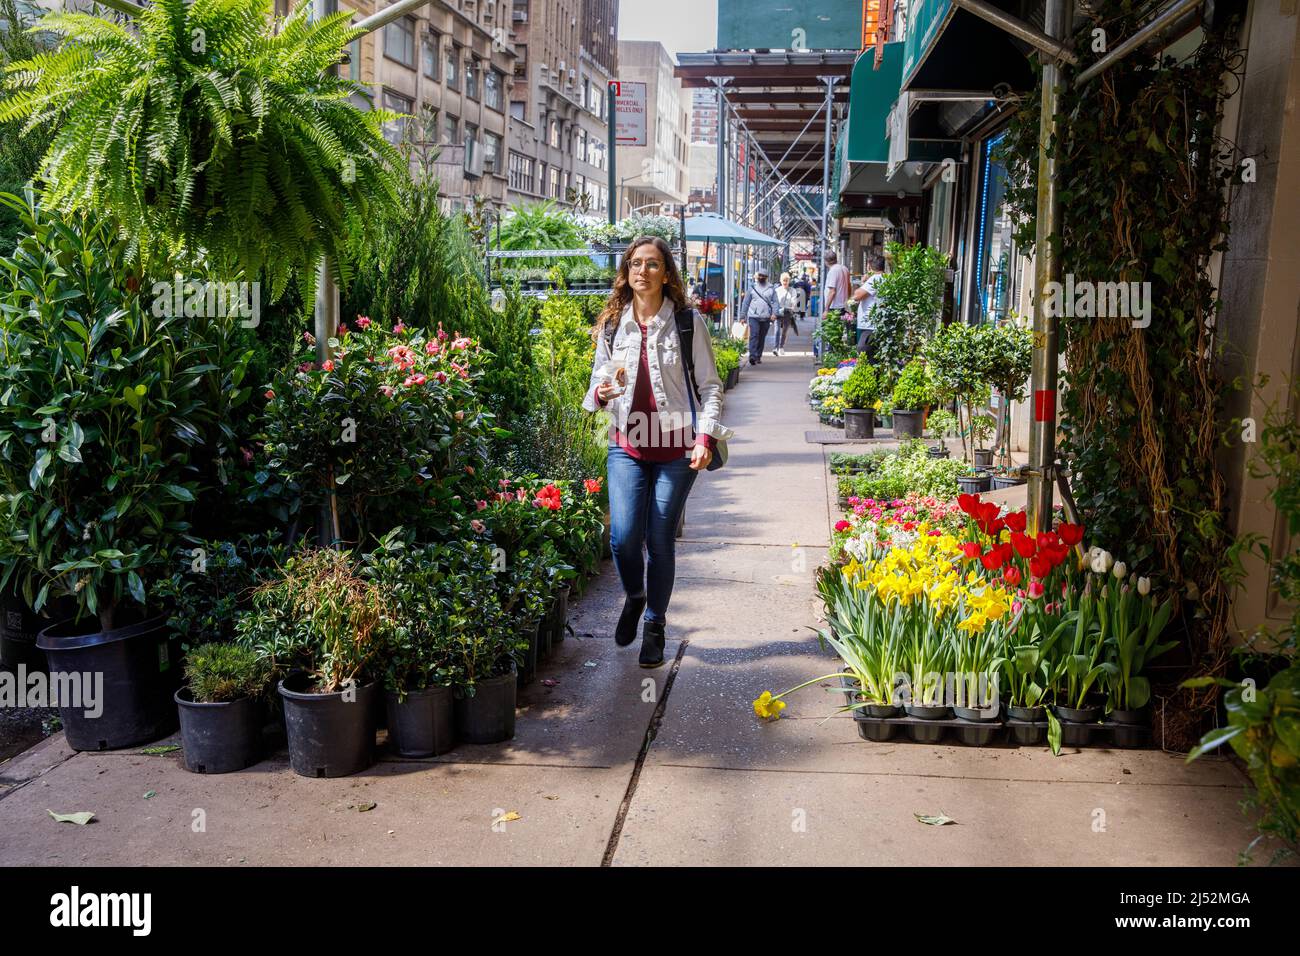 Scenic sidewalk in the Flower District, 28th Street, Manhattan, New York, NY, USA. Stock Photo